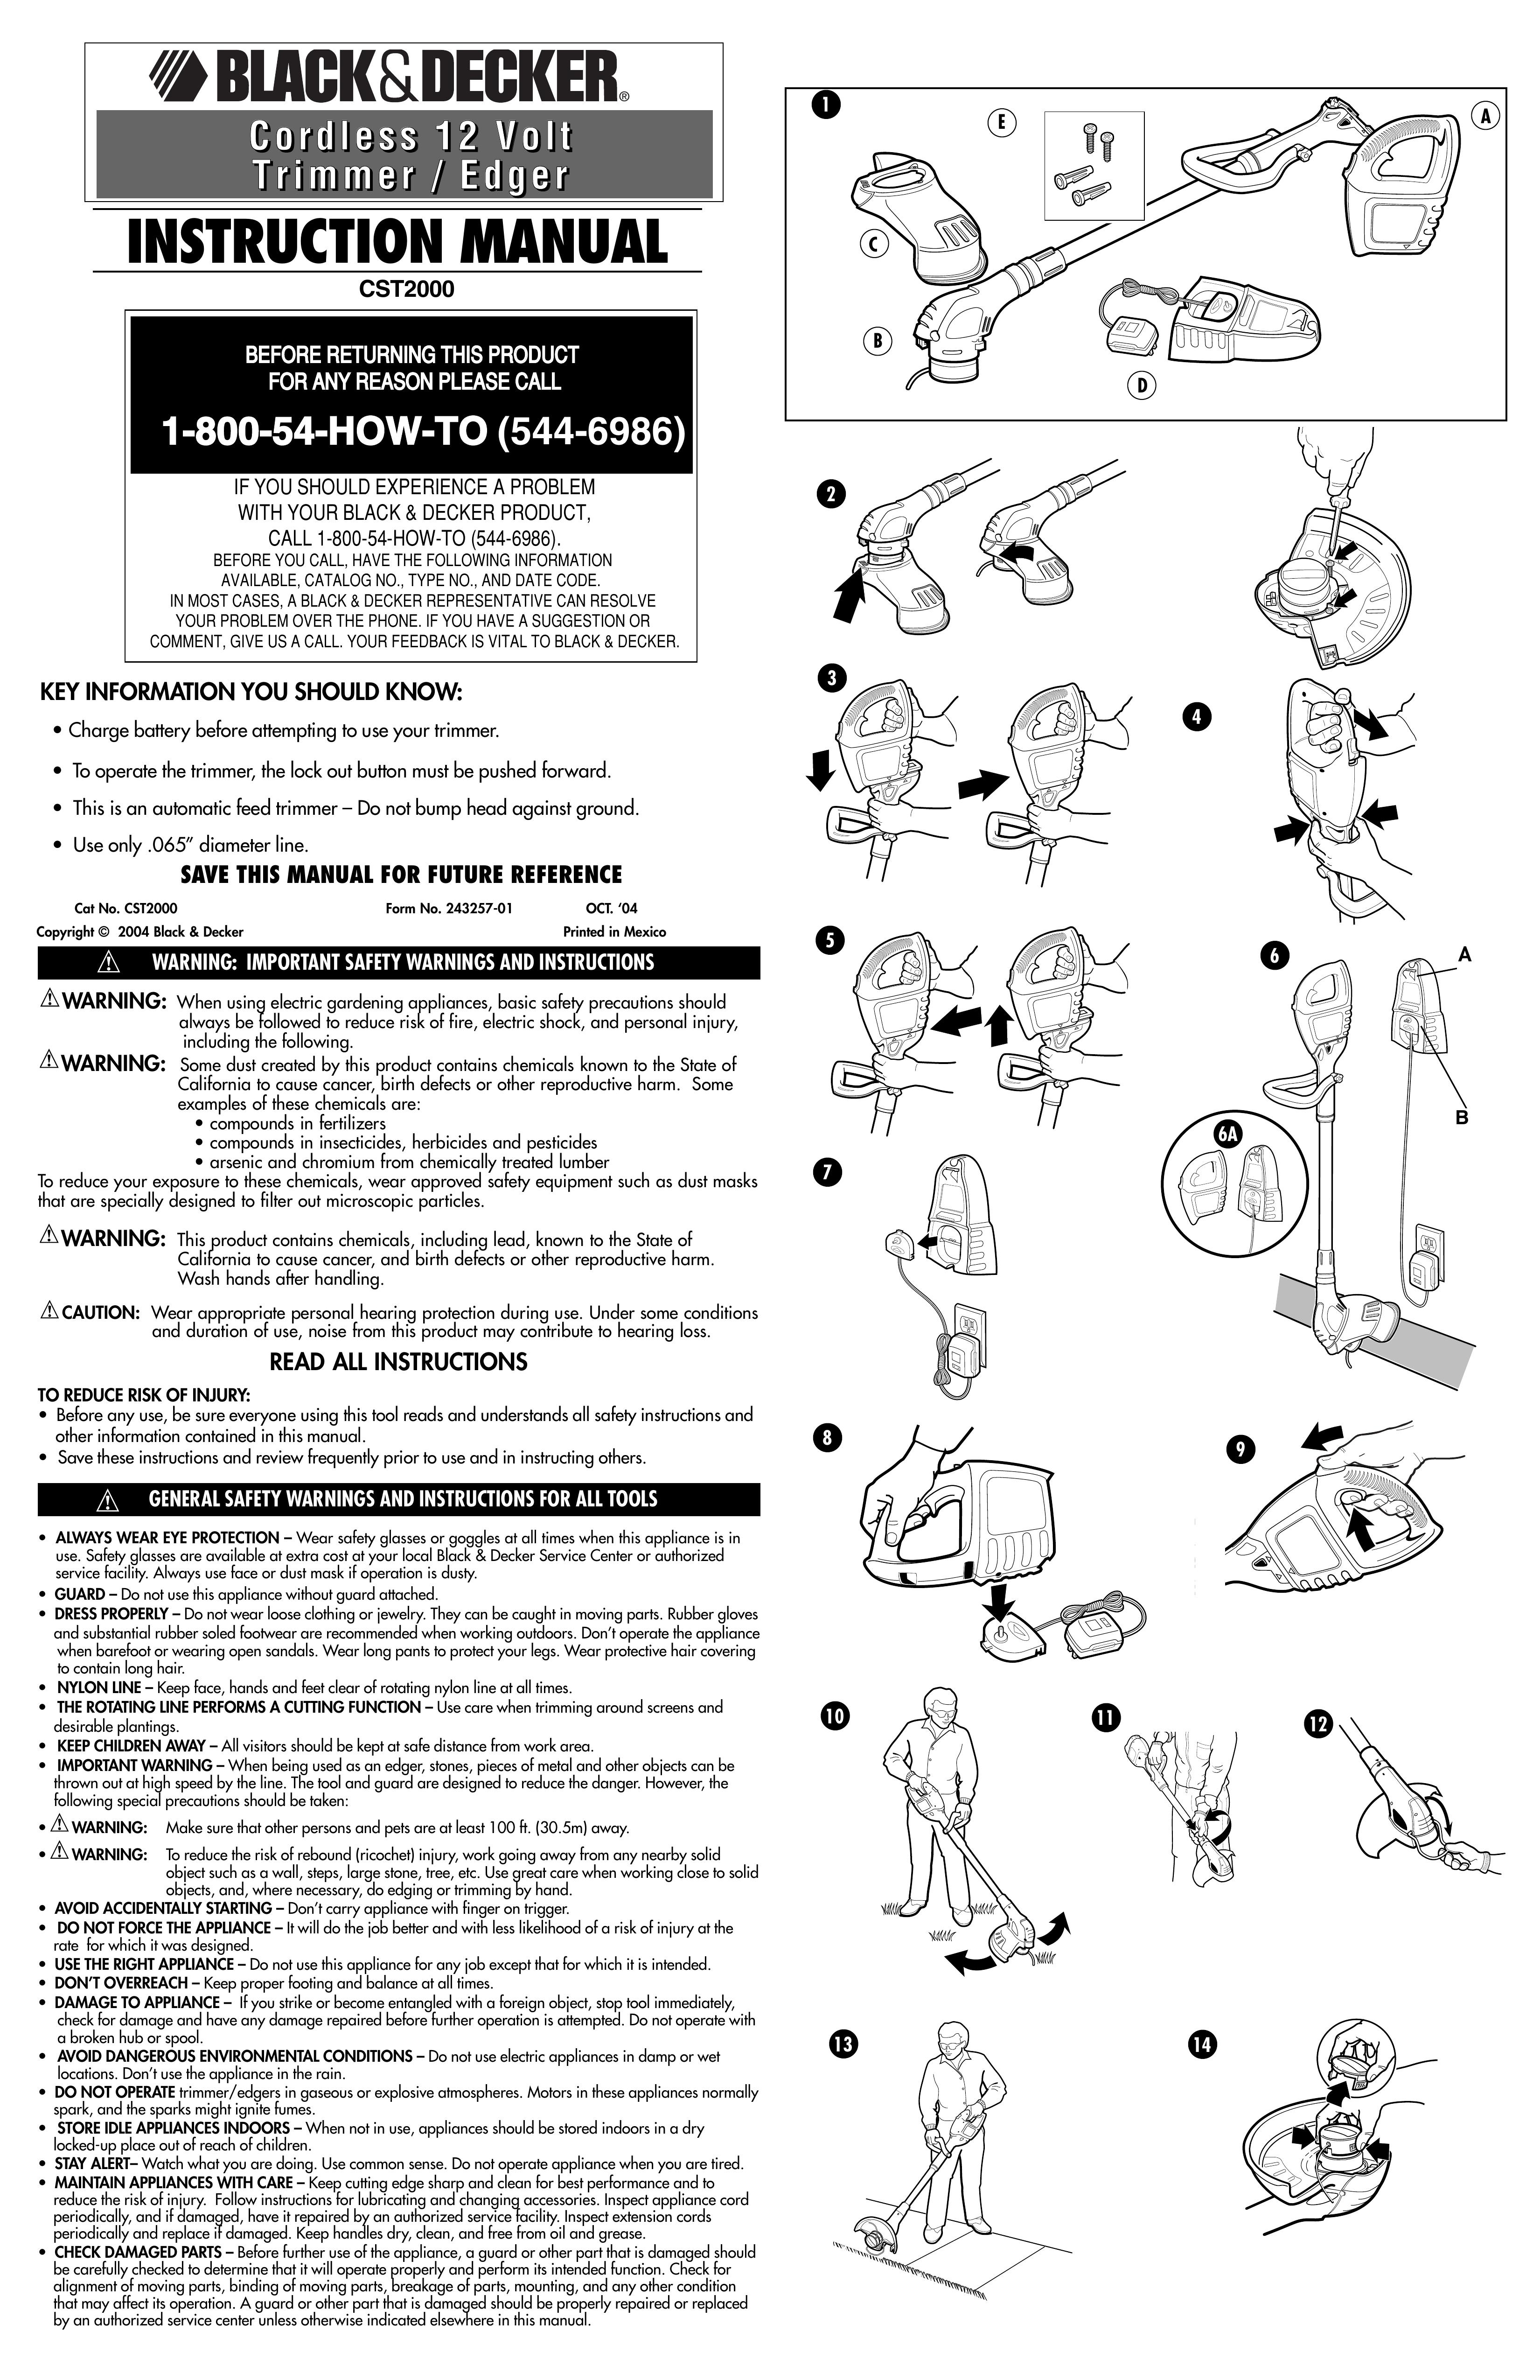 Black & Decker 243257-01 Trimmer User Manual